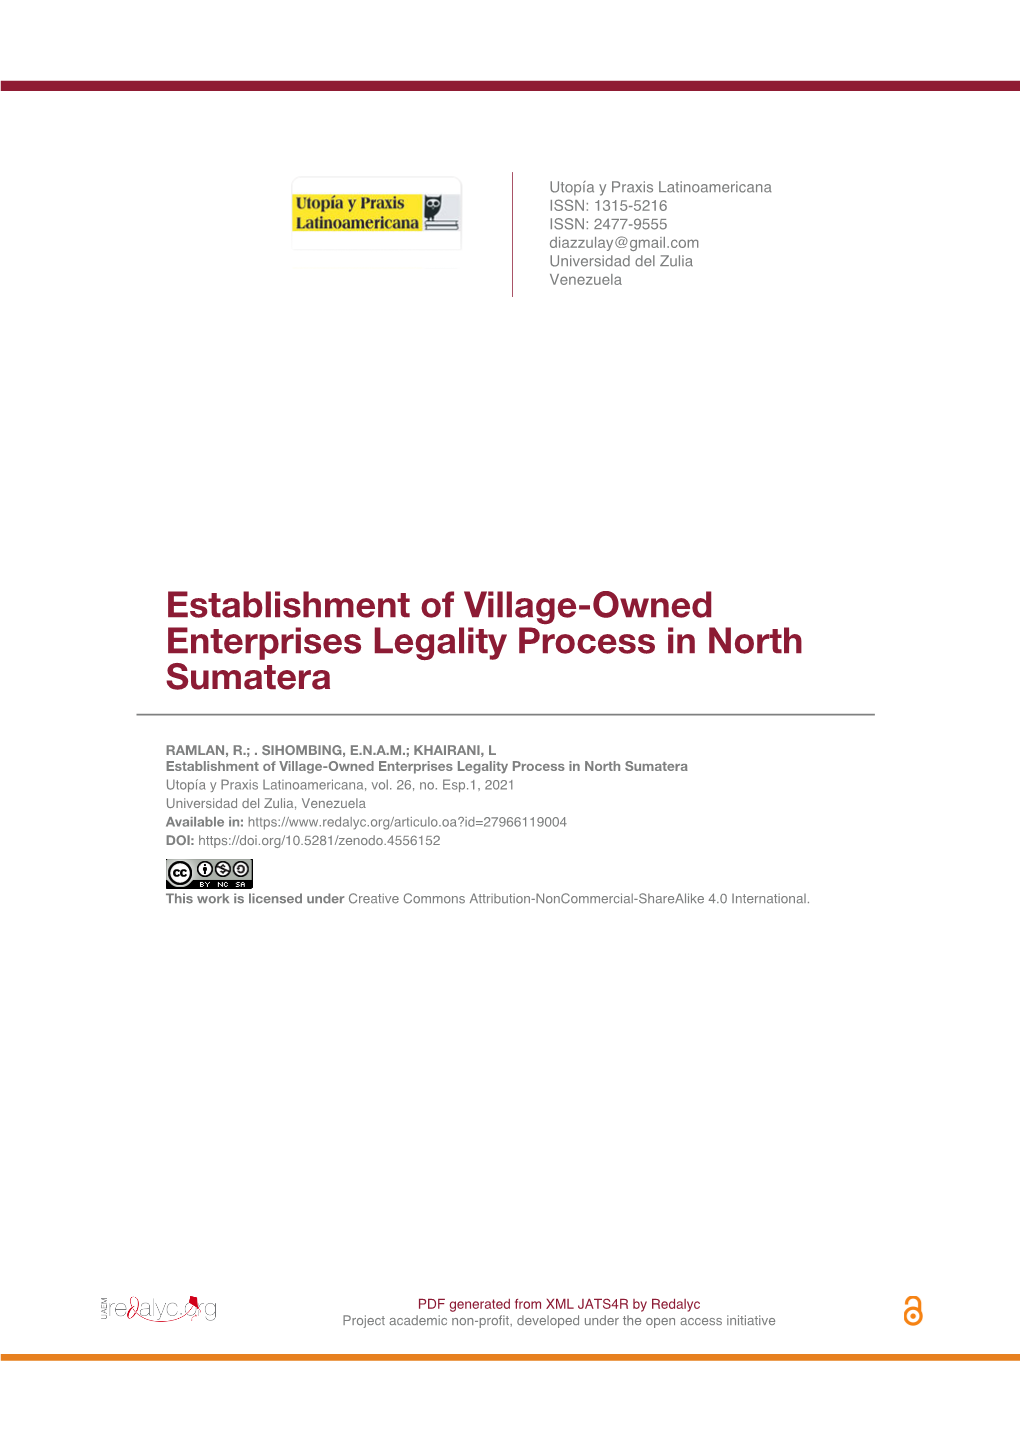 Establishment of Village-Owned Enterprises Legality Process in North Sumatera